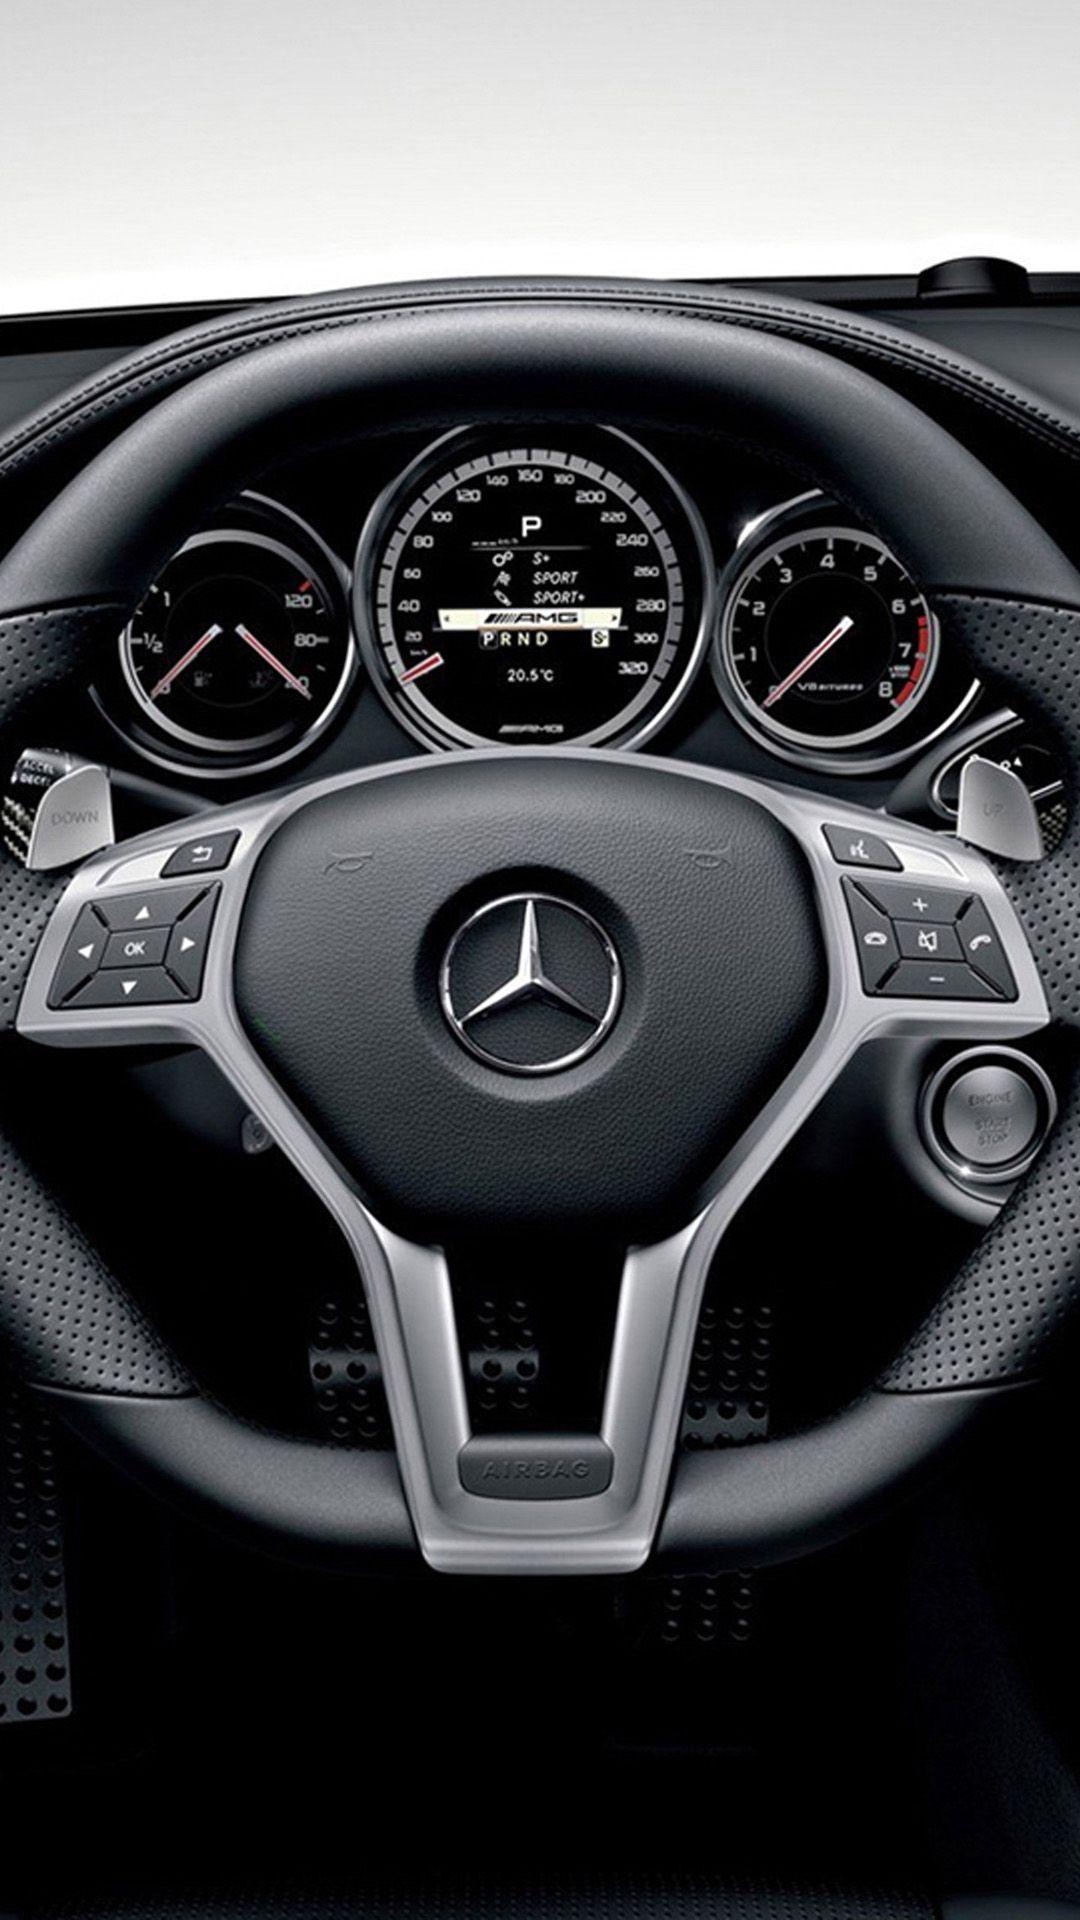 Mercedes Benz Iphone Wallpapers Top Free Mercedes Benz